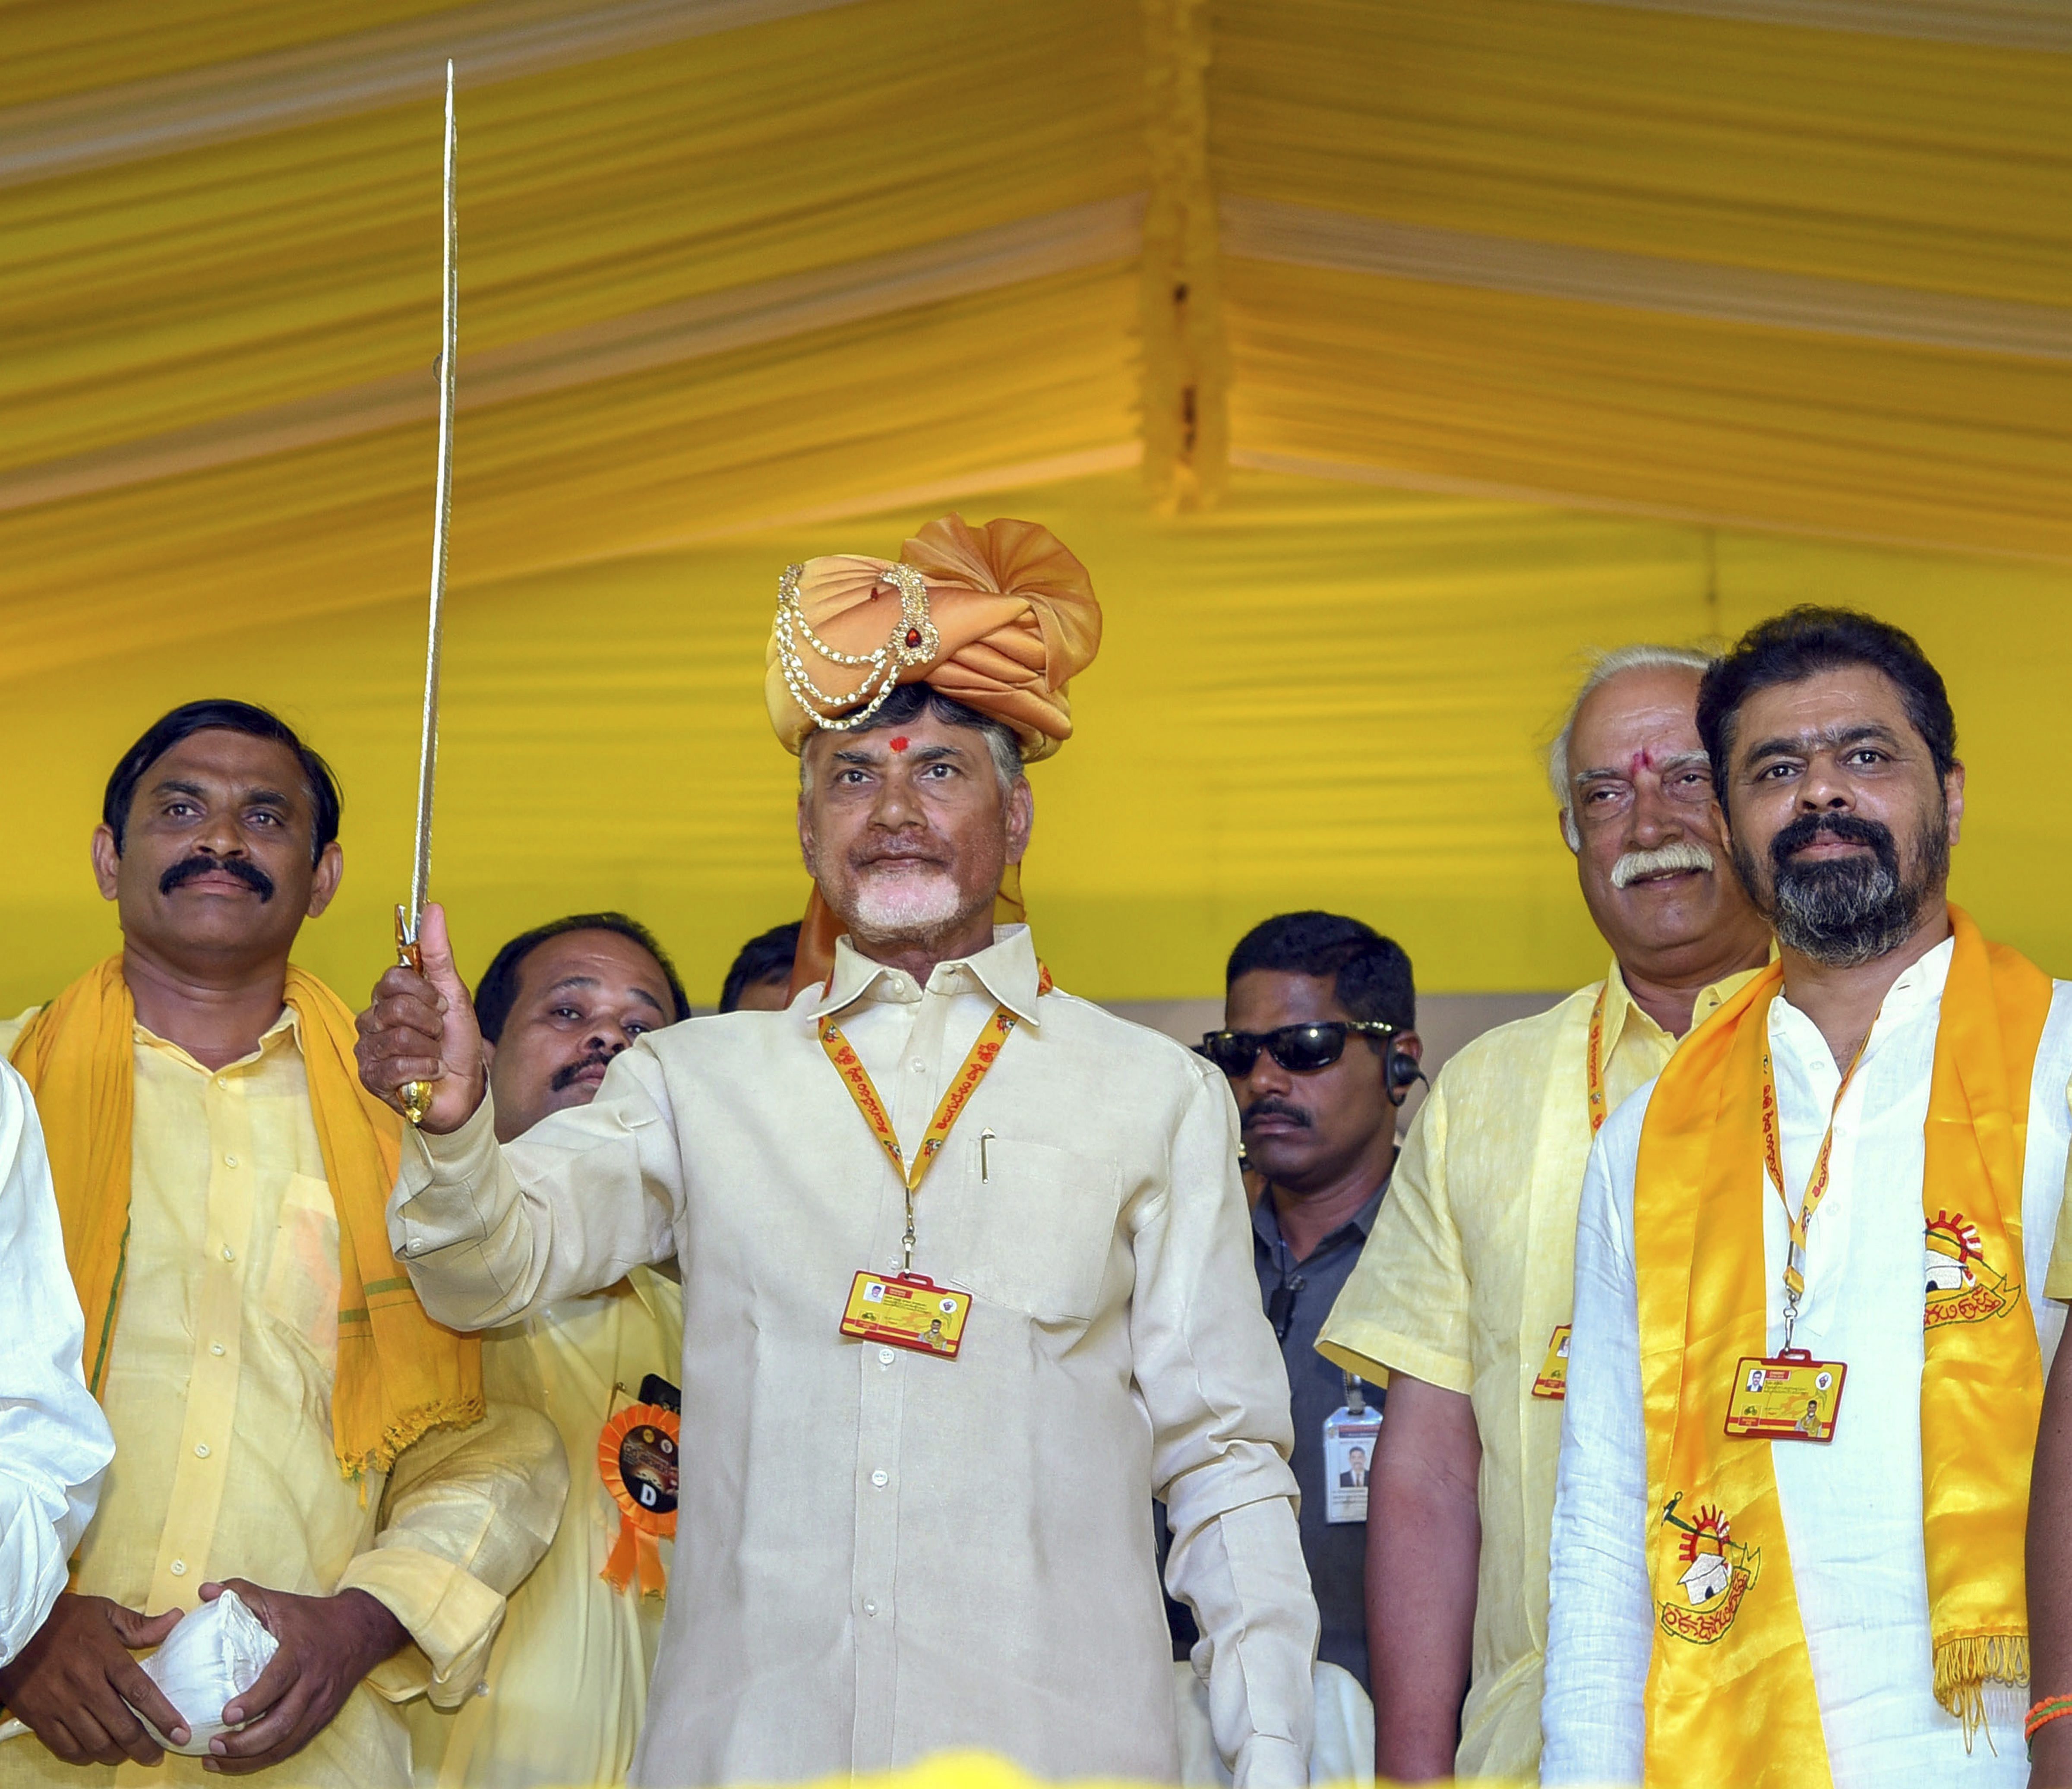 Andhra Pradesh Chief Minister Chandrababu Naidu holds a sword during 'Dharma Porata Deeksha' being held at Produturu, in Kadapa - PTI